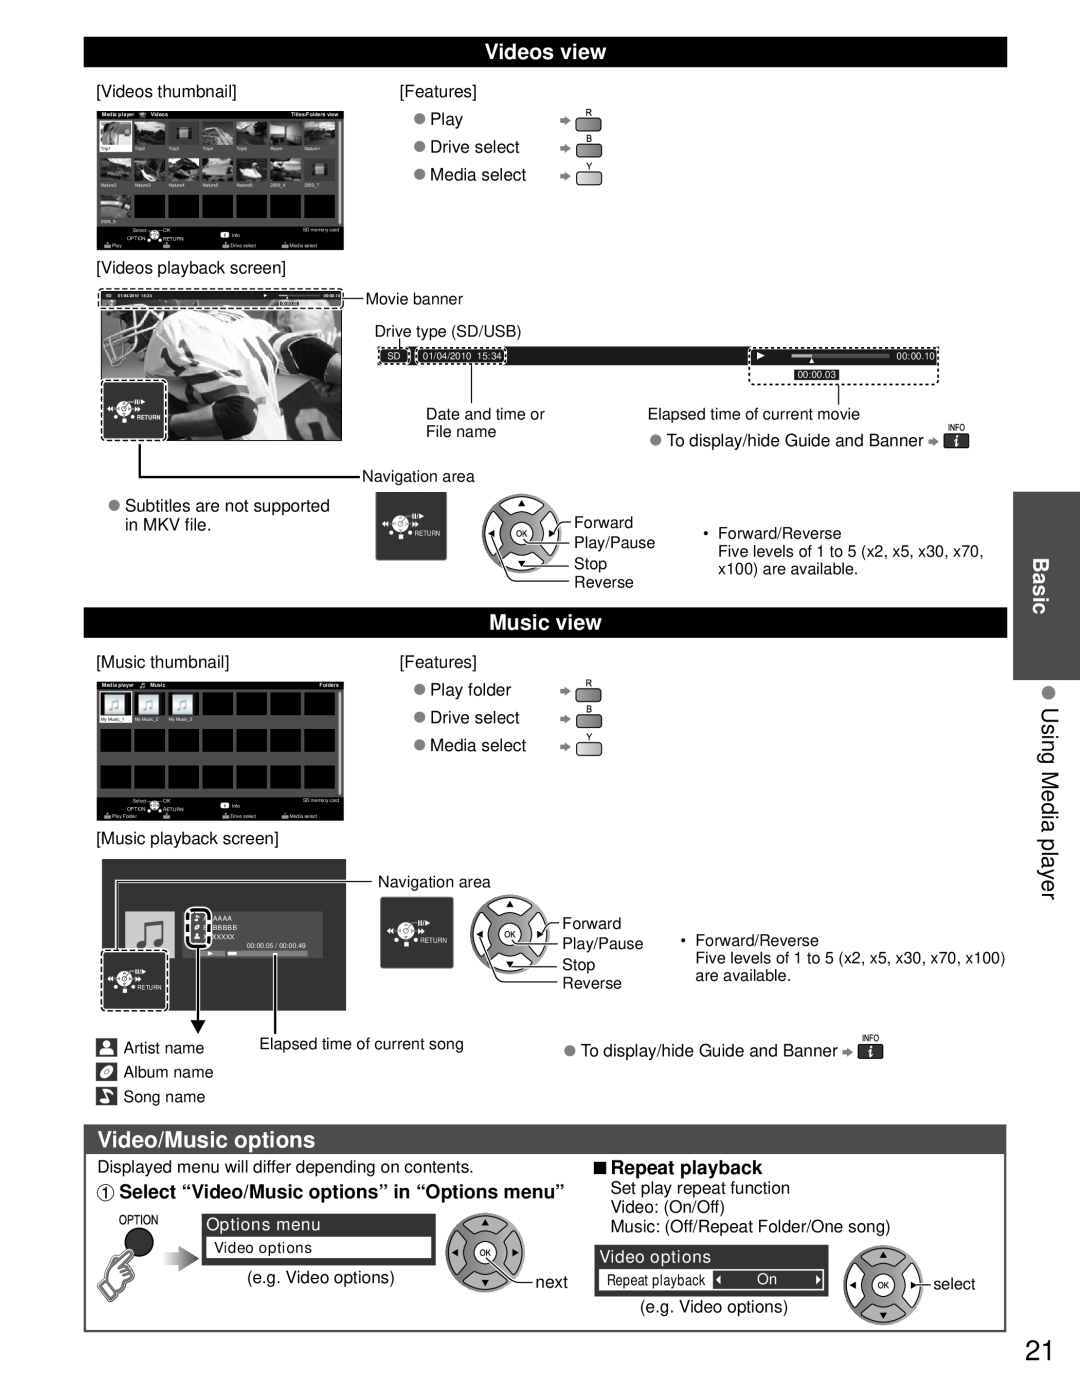 Panasonic TC-P50U50 owner manual Video/Music options, Videos view, Music view, Using Media, Repeat playback, Options menu 